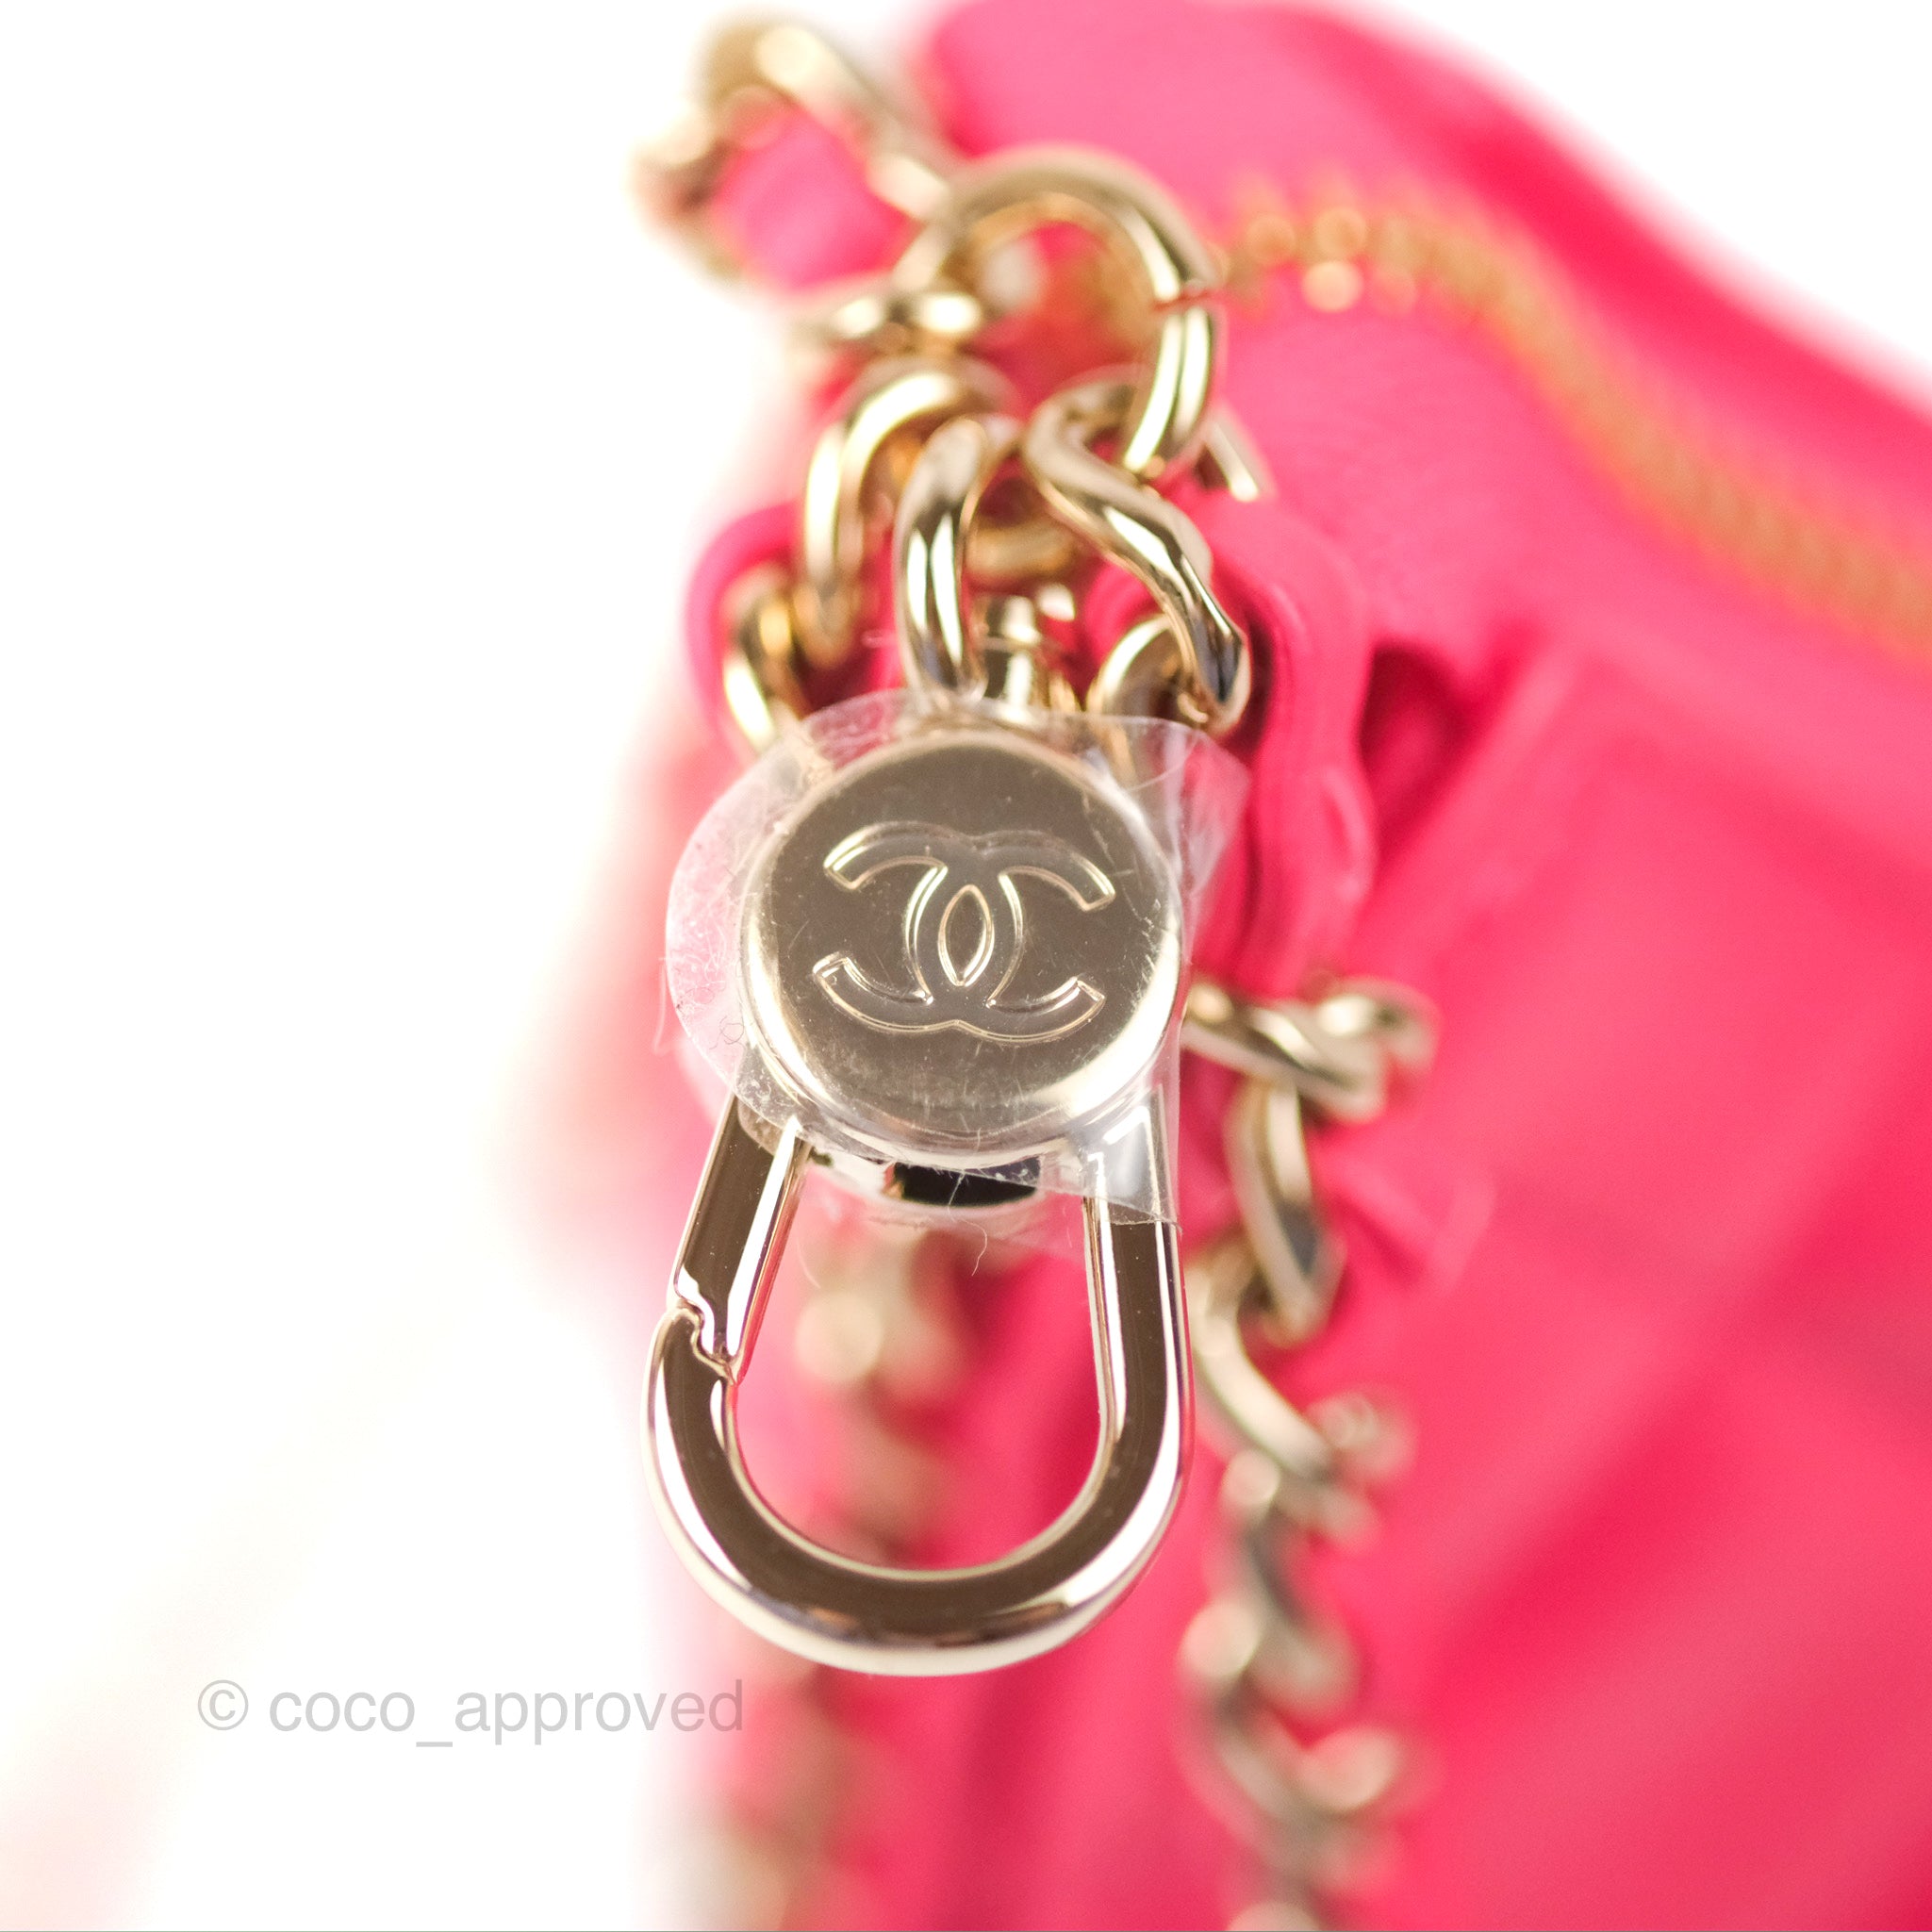 Small hobo bag, Velvet & gold metal, pink — Fashion | CHANEL